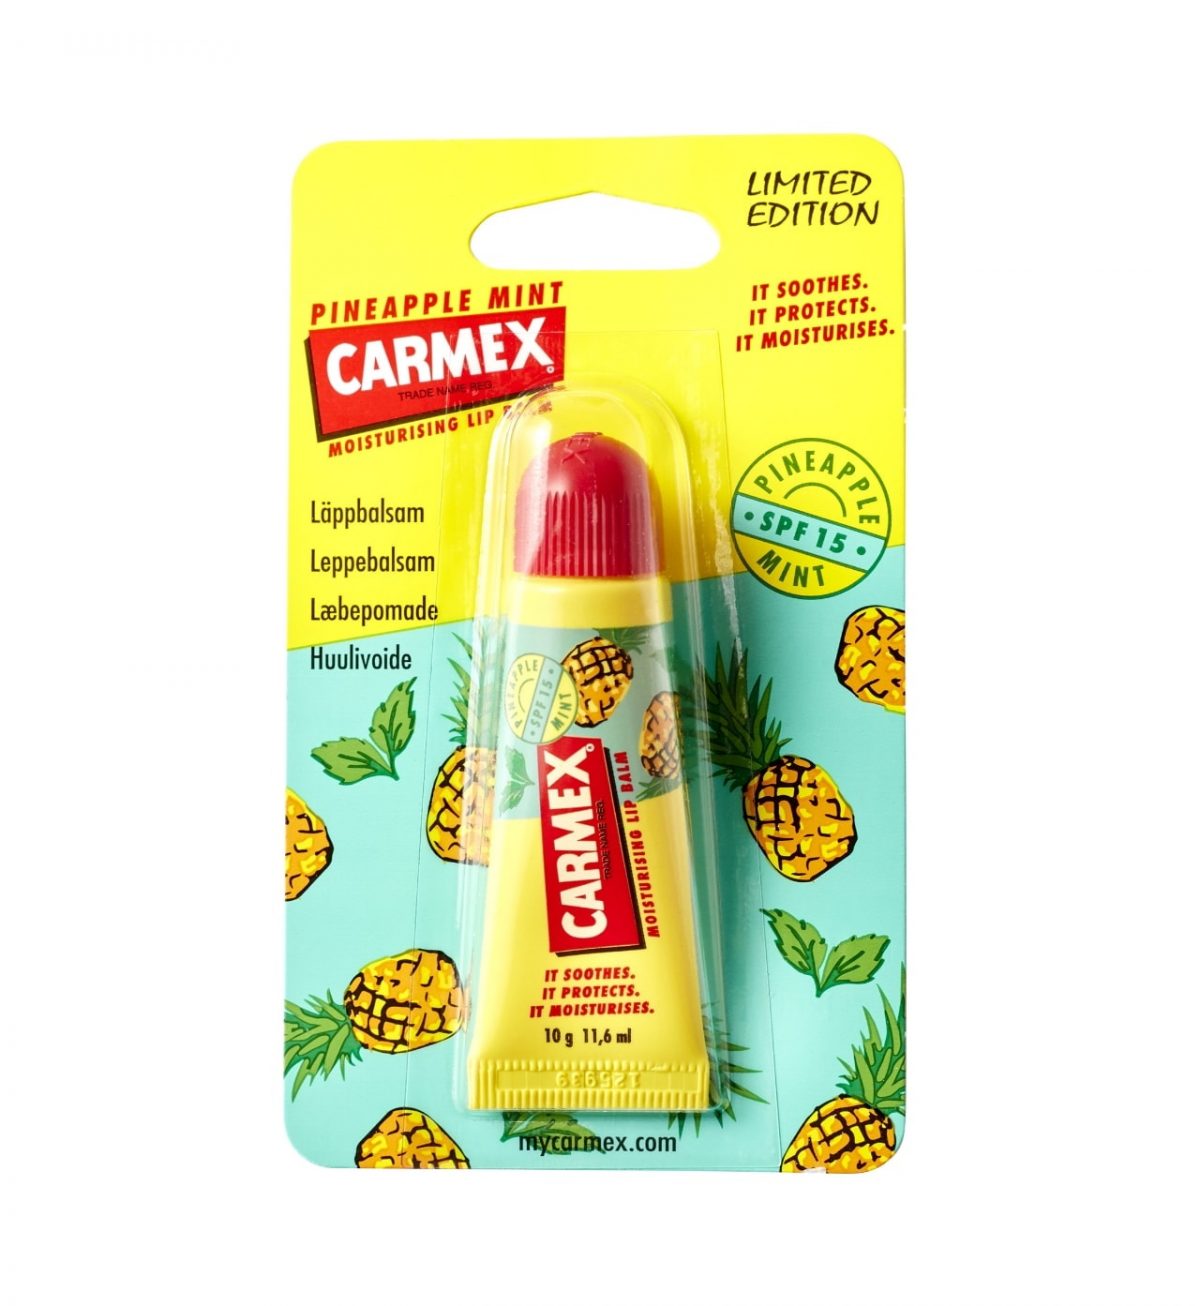 carmex pineapple mint tub